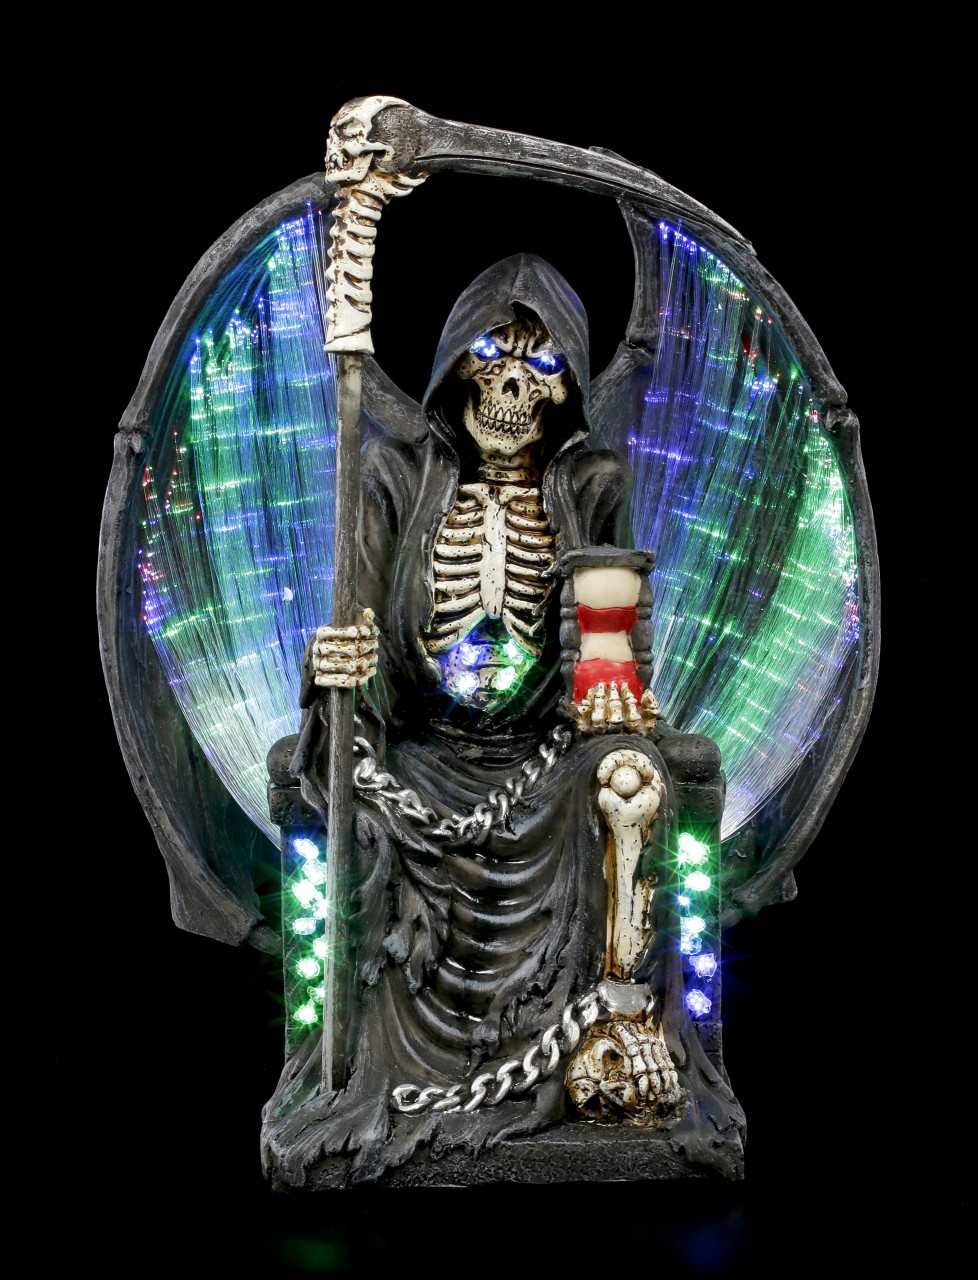 Grim Reaper Figurine with LED Lighting